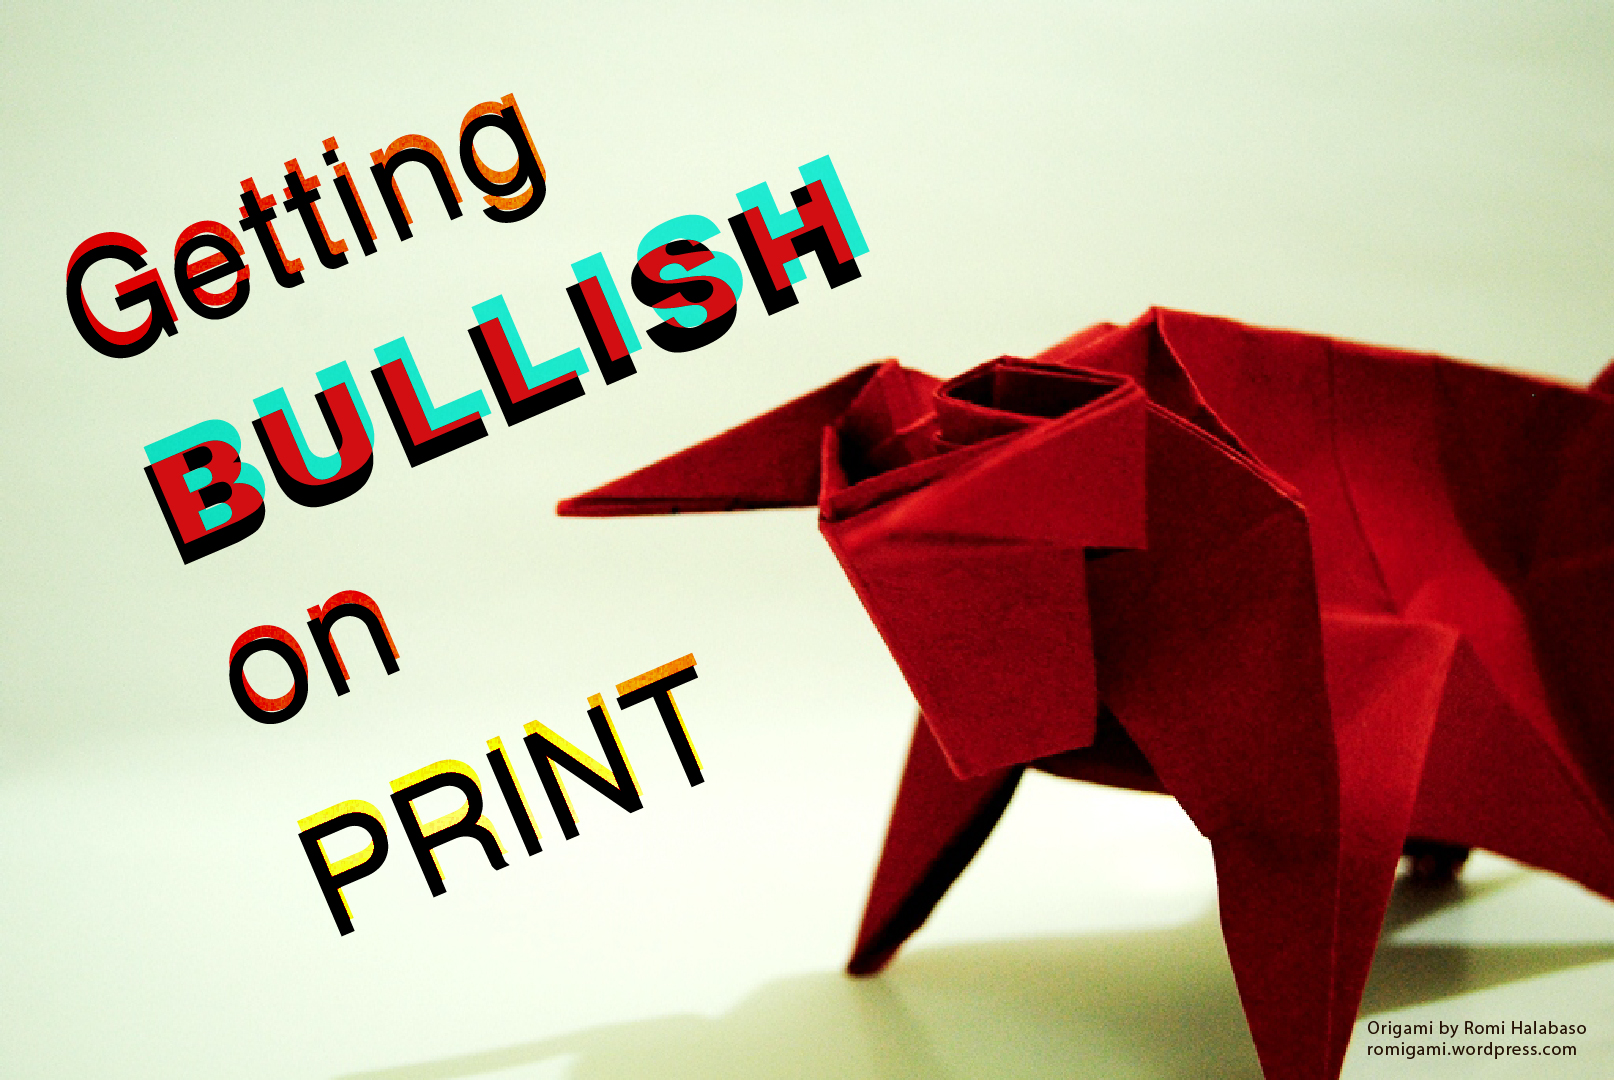 Getting Bullish on Print - Print Media Centr